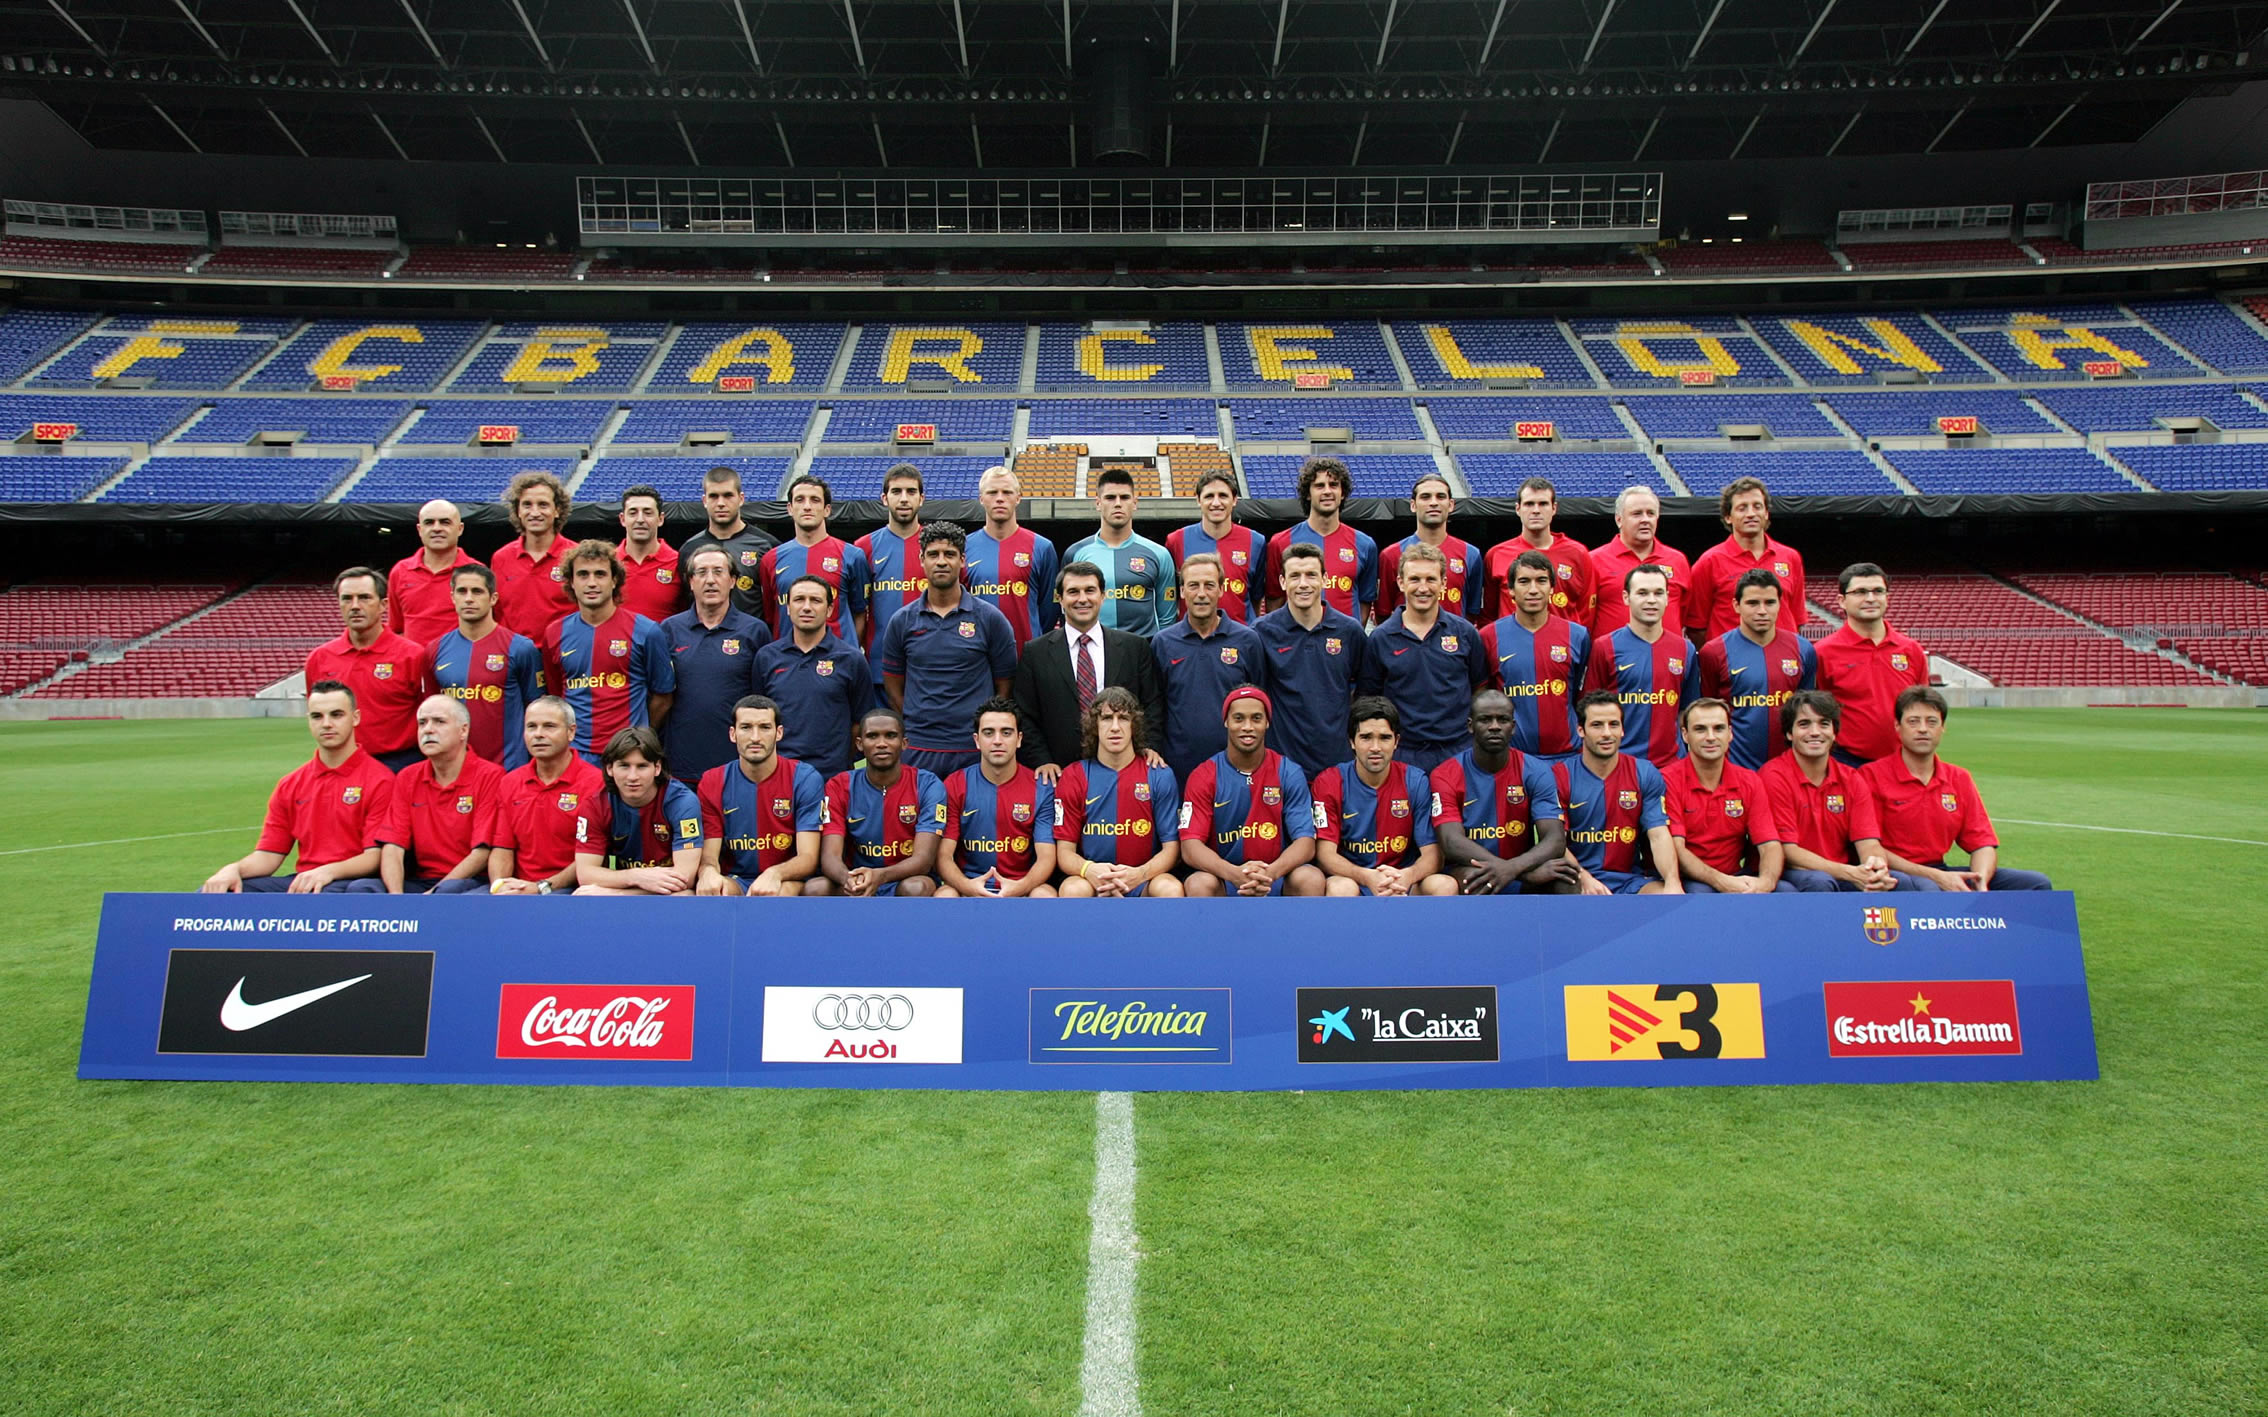 Football stadium, FC Barcelona team players, FC Barcelona hd images